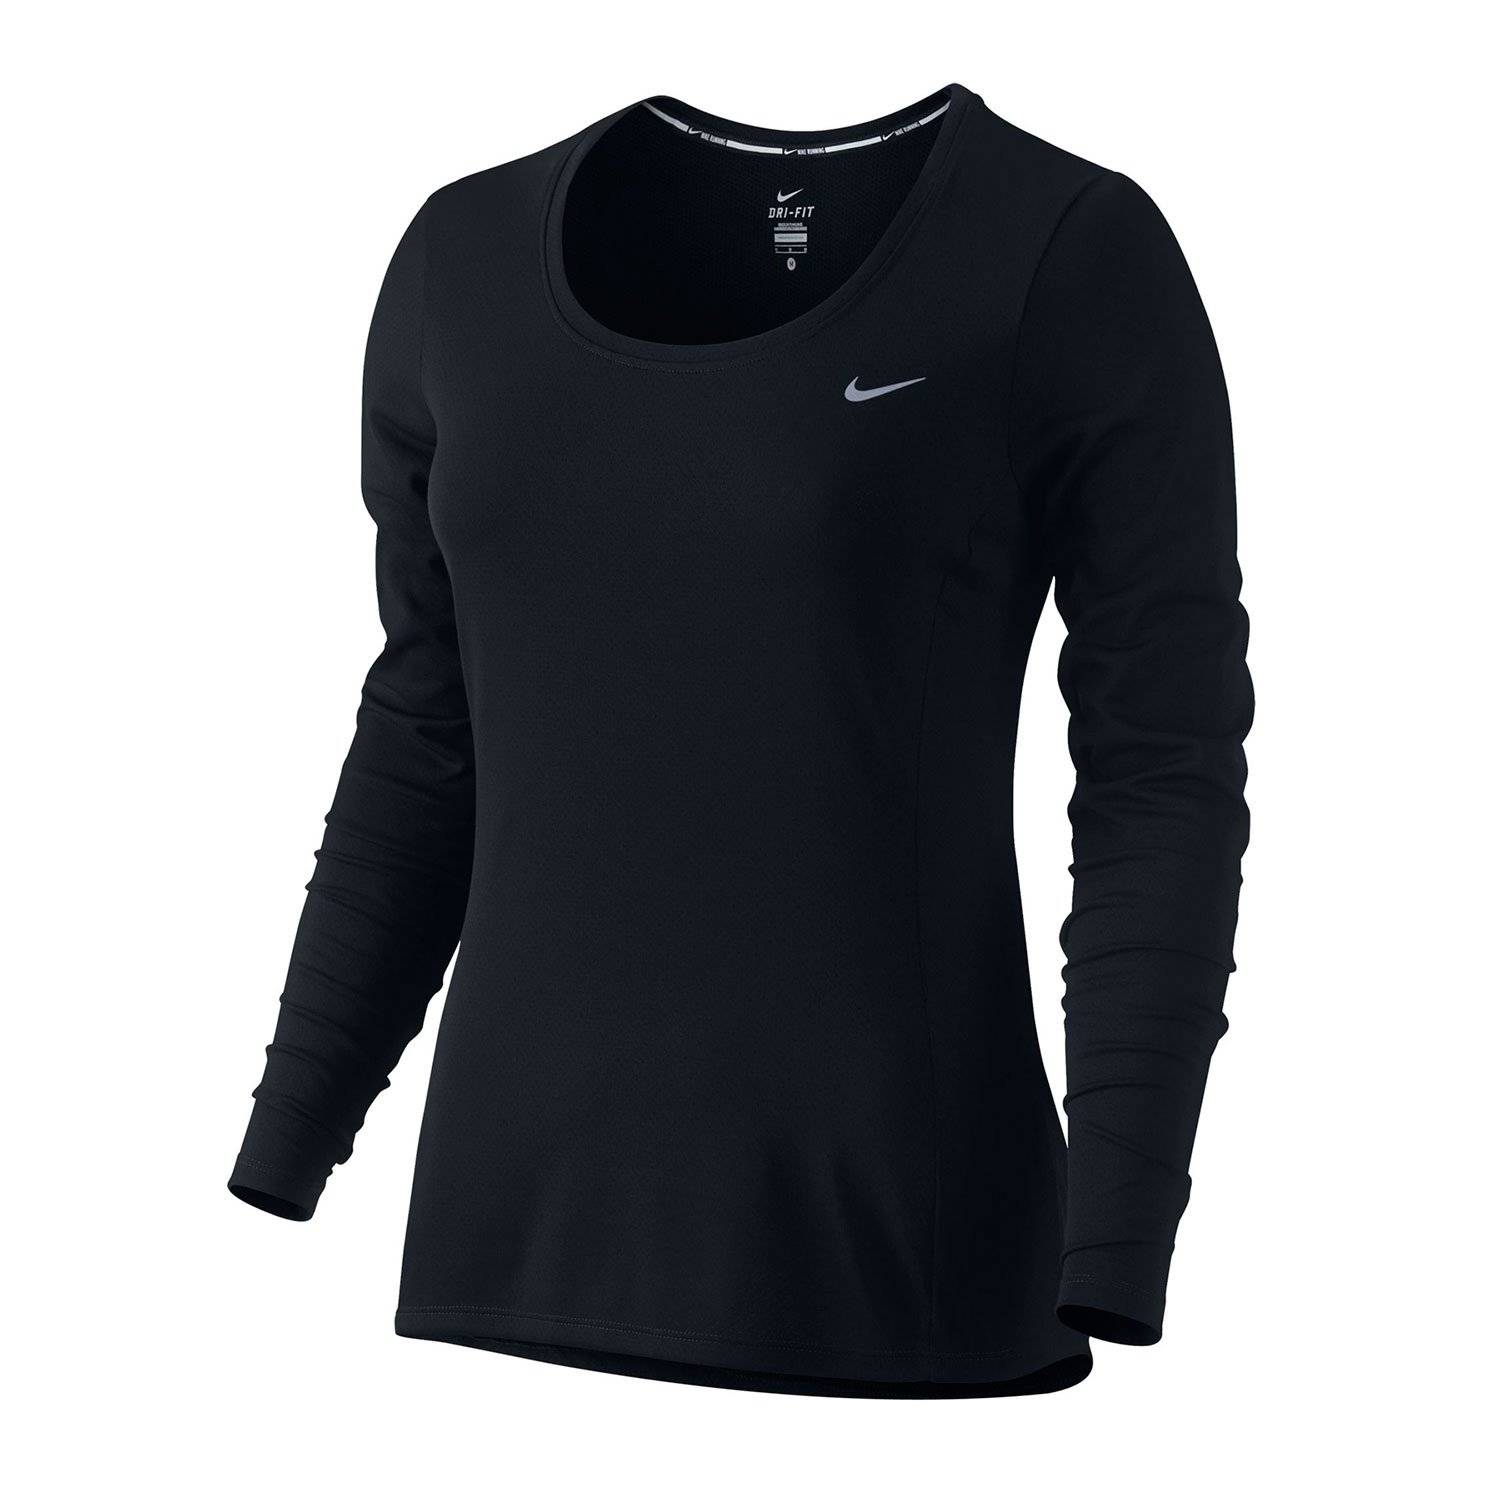 Nike Womens DRI FIT Long Sleeve Running Shirt